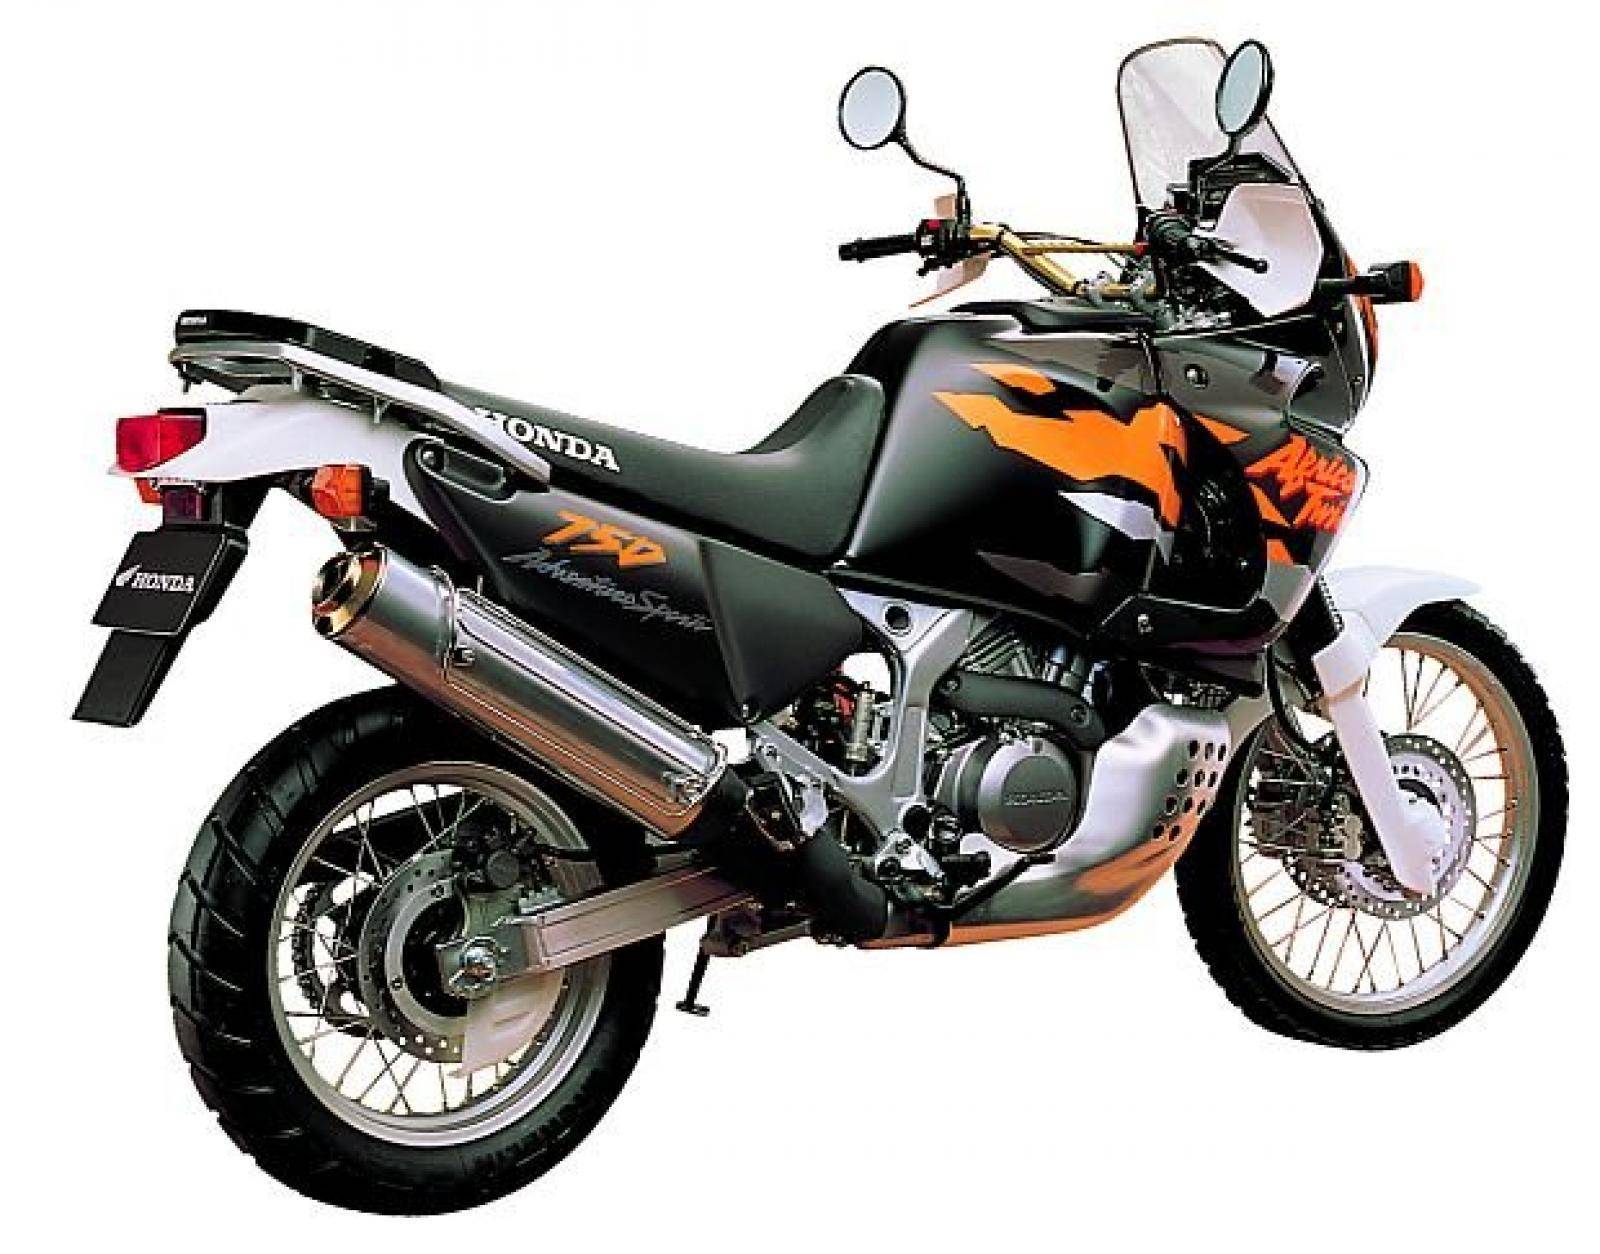 Honda xrv750 africa twin: review, history, specs - bikeswiki.com, japanese motorcycle encyclopedia